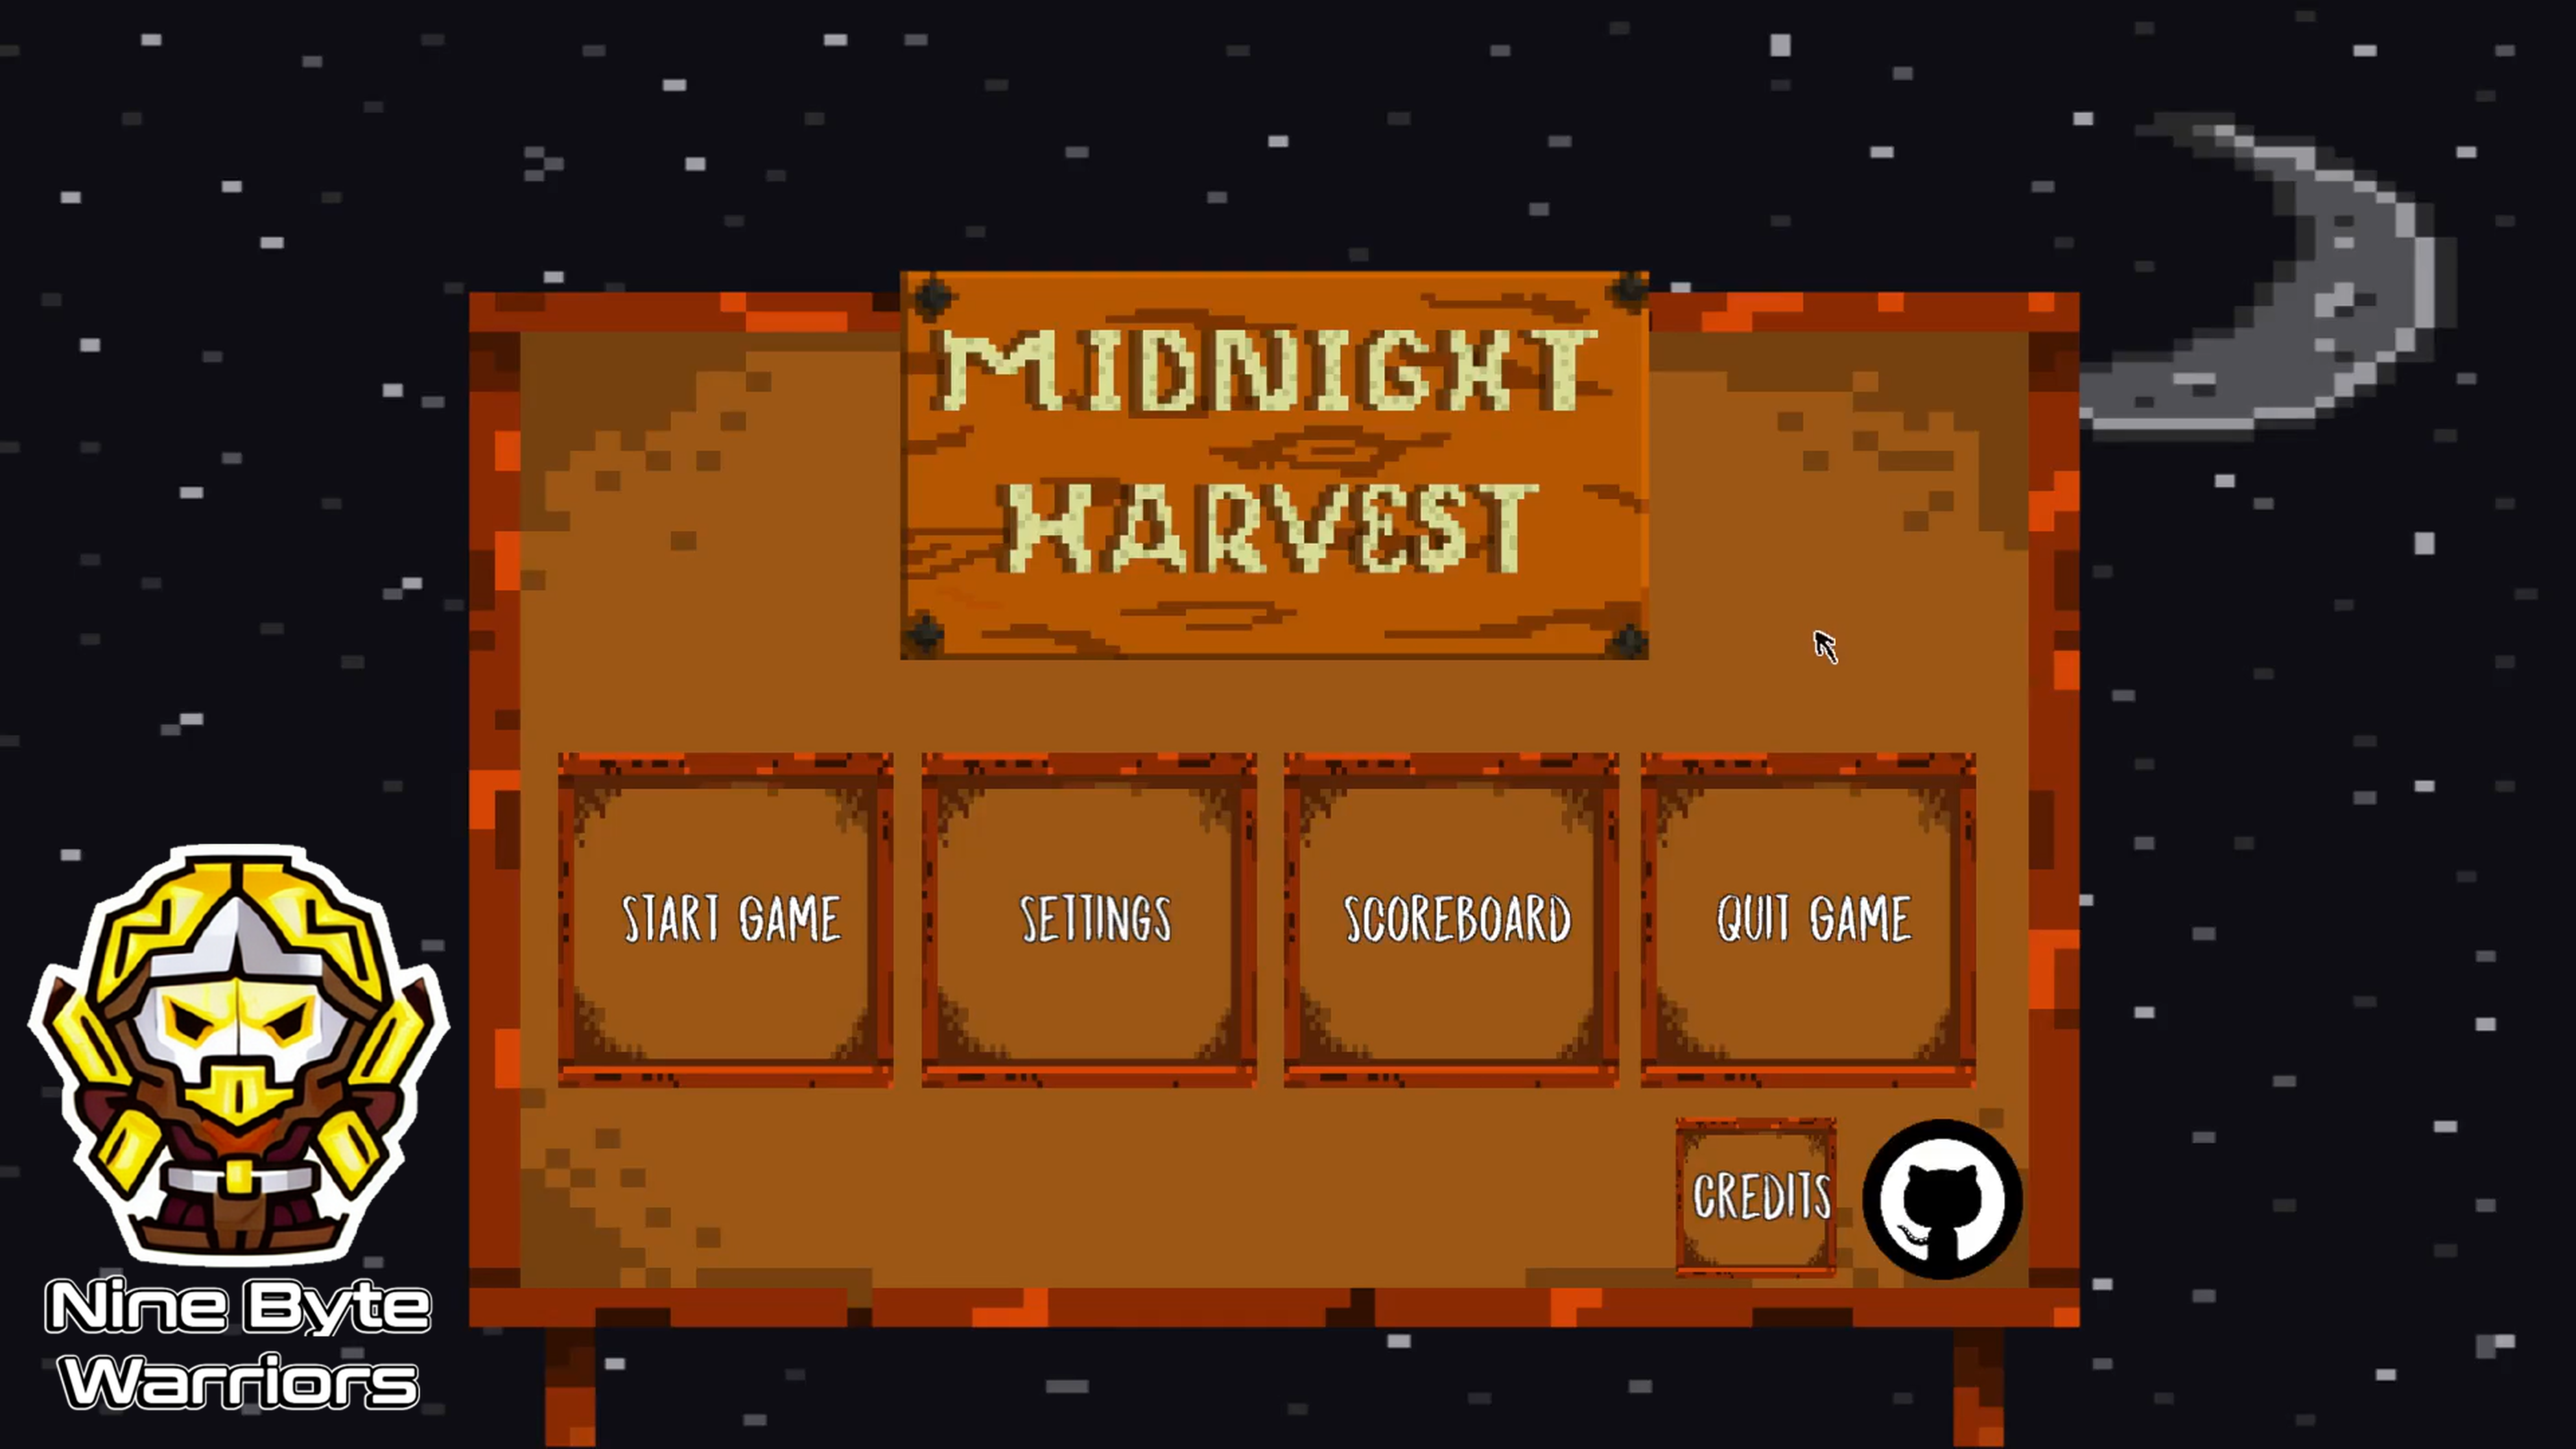 Midnight Harvest by Nine Byte Warriors